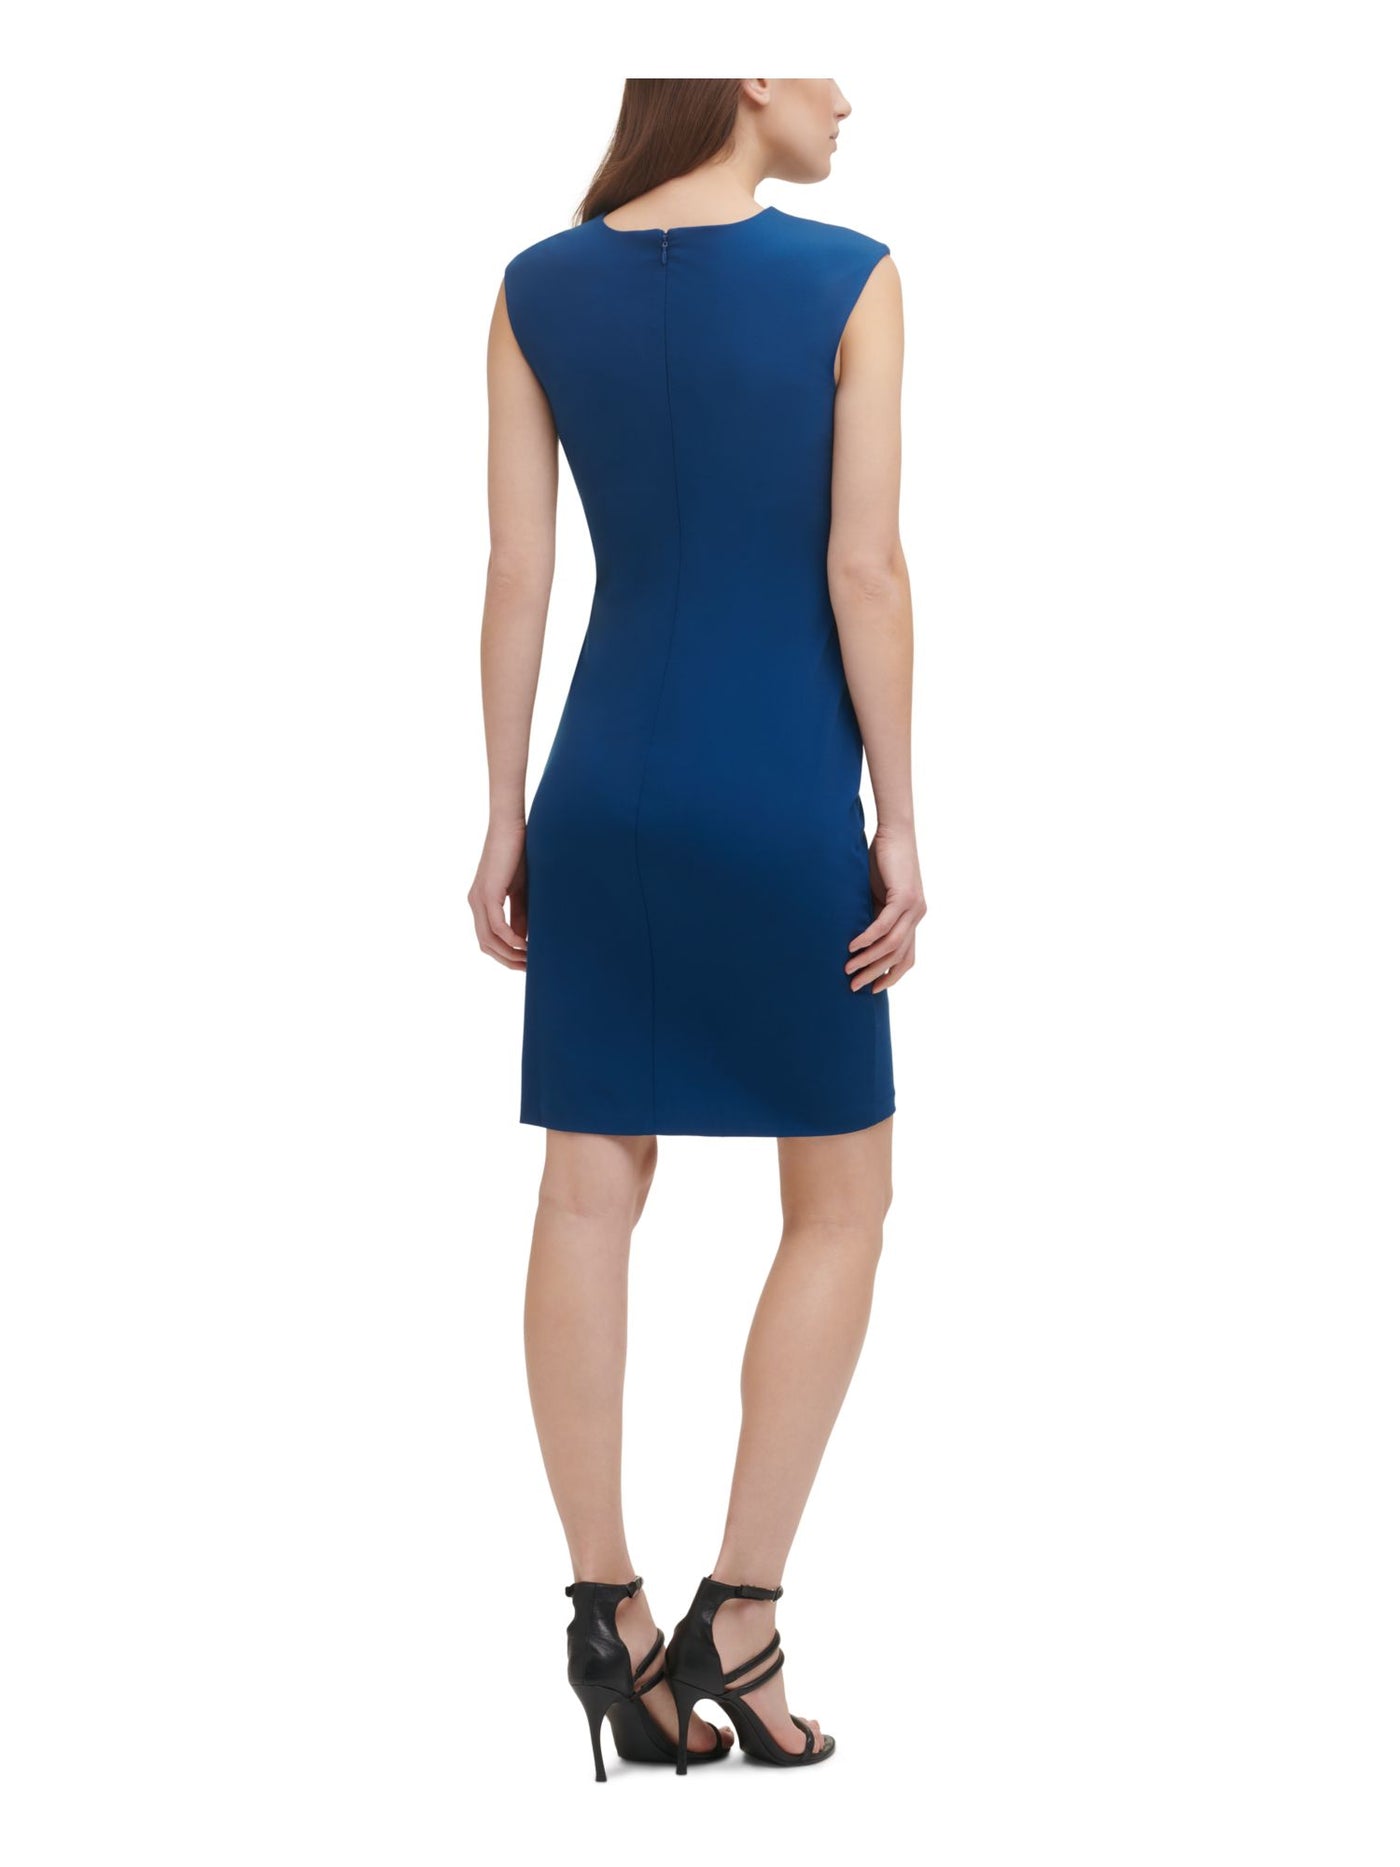 DKNY Womens Blue Zippered Side-knot Sleeveless Round Neck Above The Knee Cocktail Sheath Dress 6